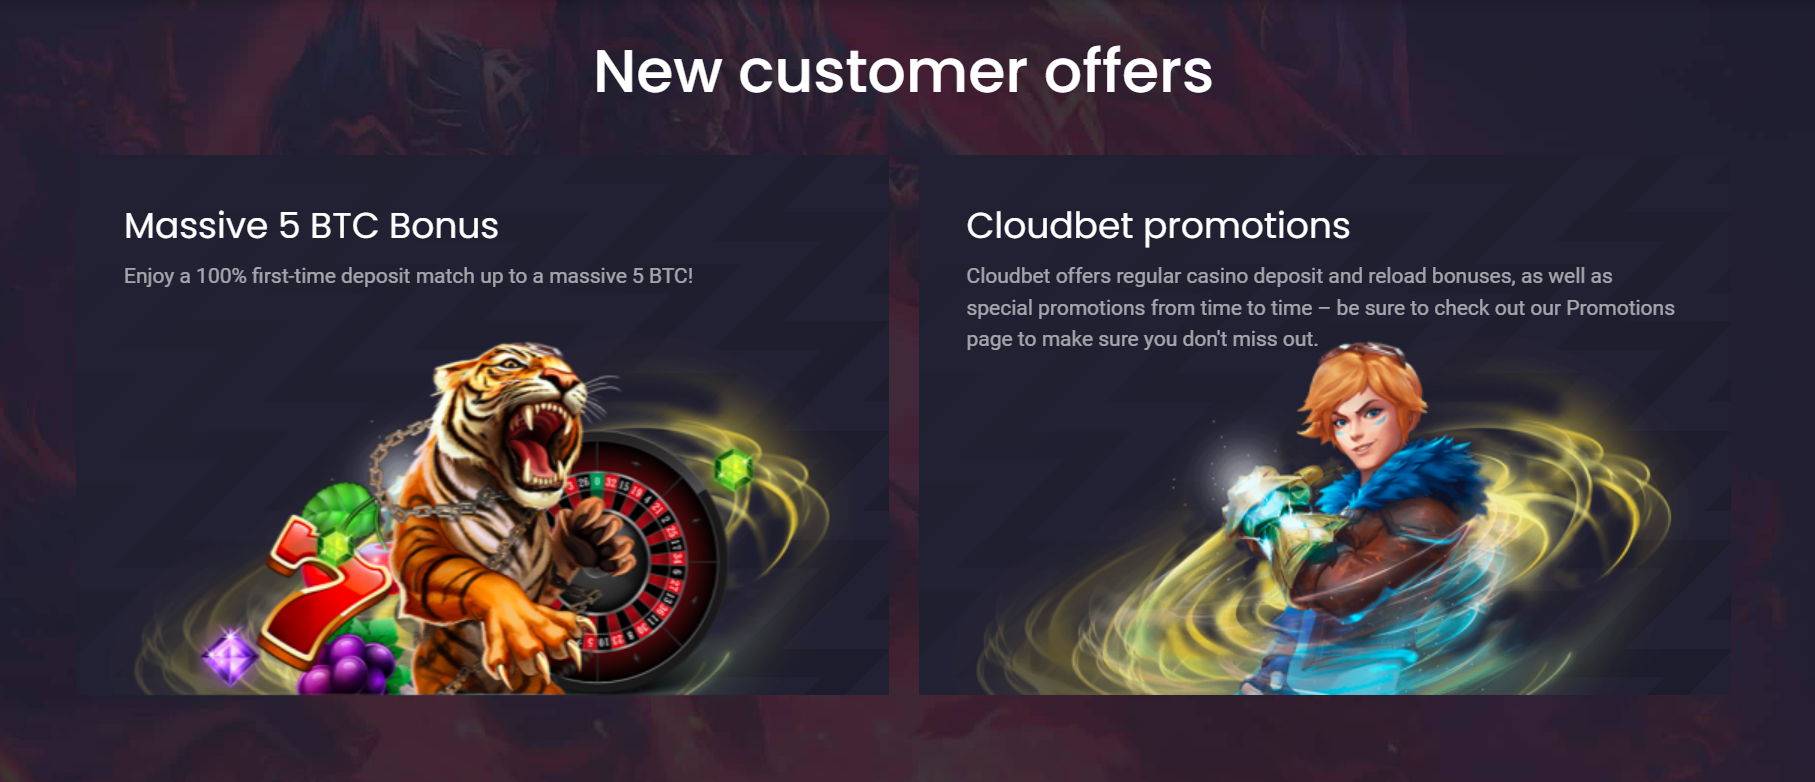 cloudbet promotions and BTC bonuses